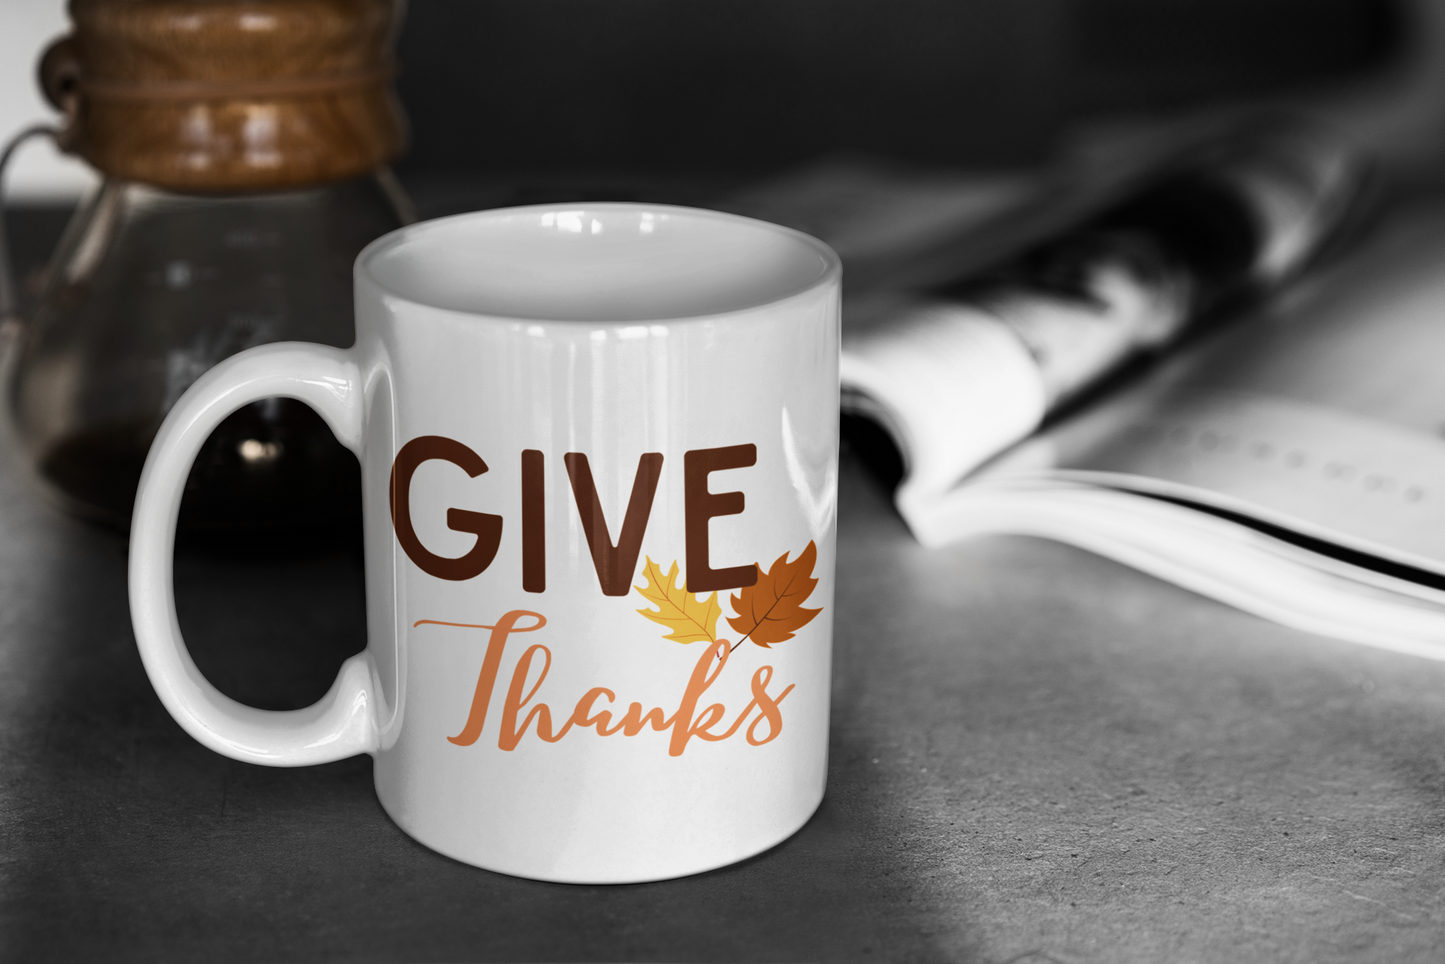 Give Thanks - 11 & 15 oz. White Mug